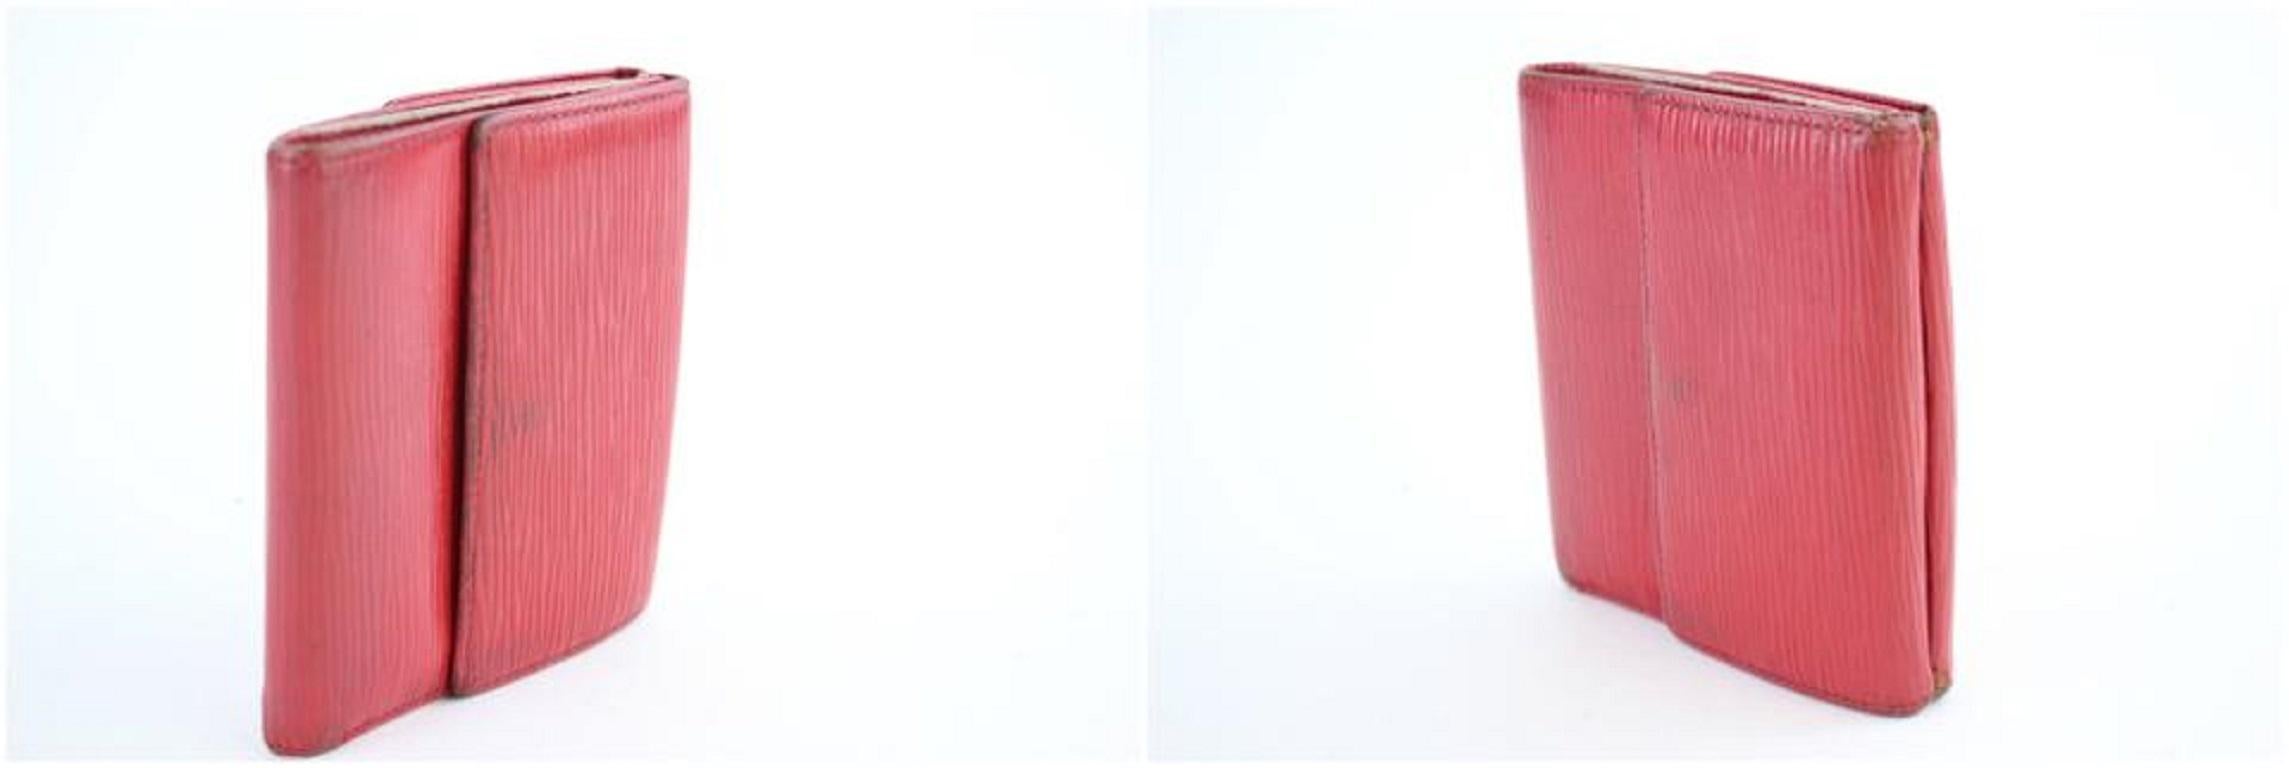 Louis Vuitton Red Epi Compact 7lk1002 Wallet For Sale 3